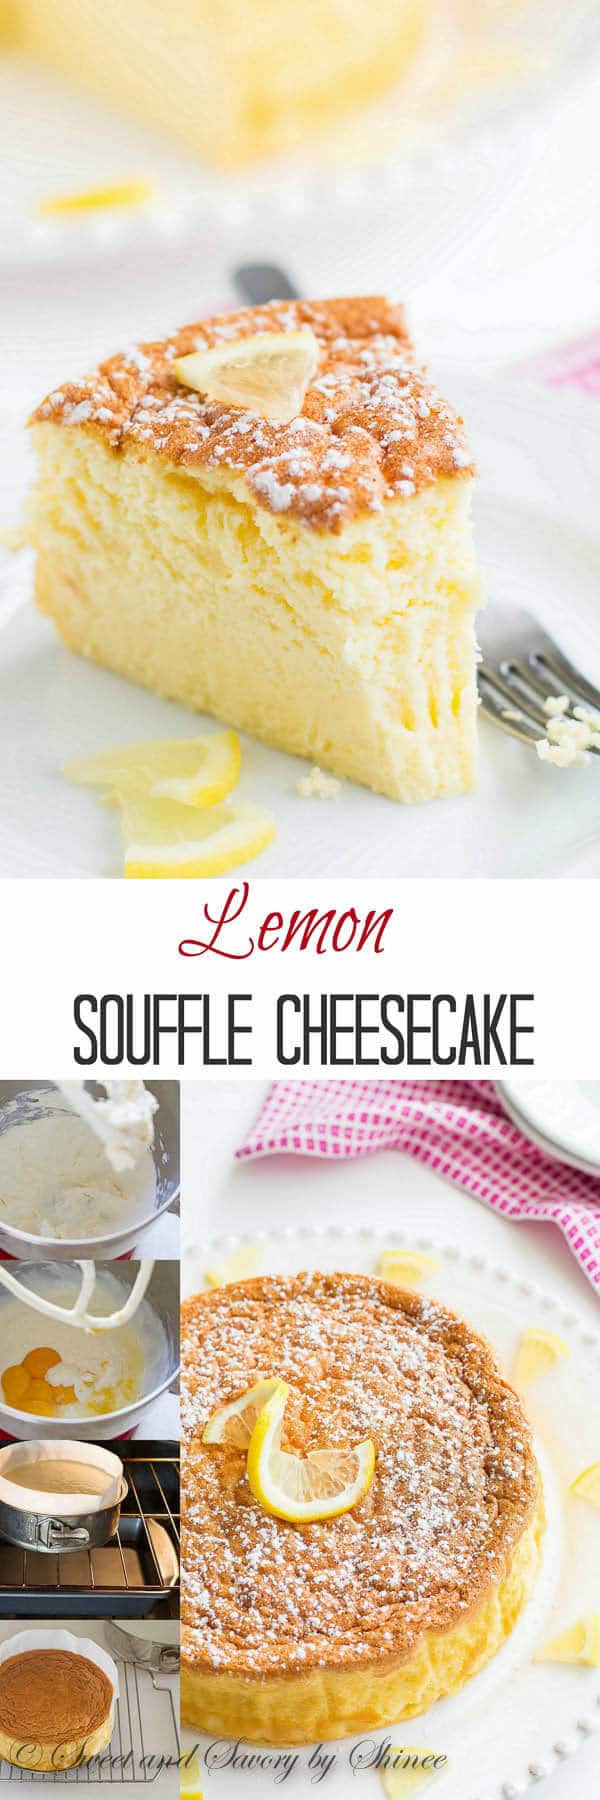 Lemon Souffle Cheesecake ~Sweet & Savory by Shinee